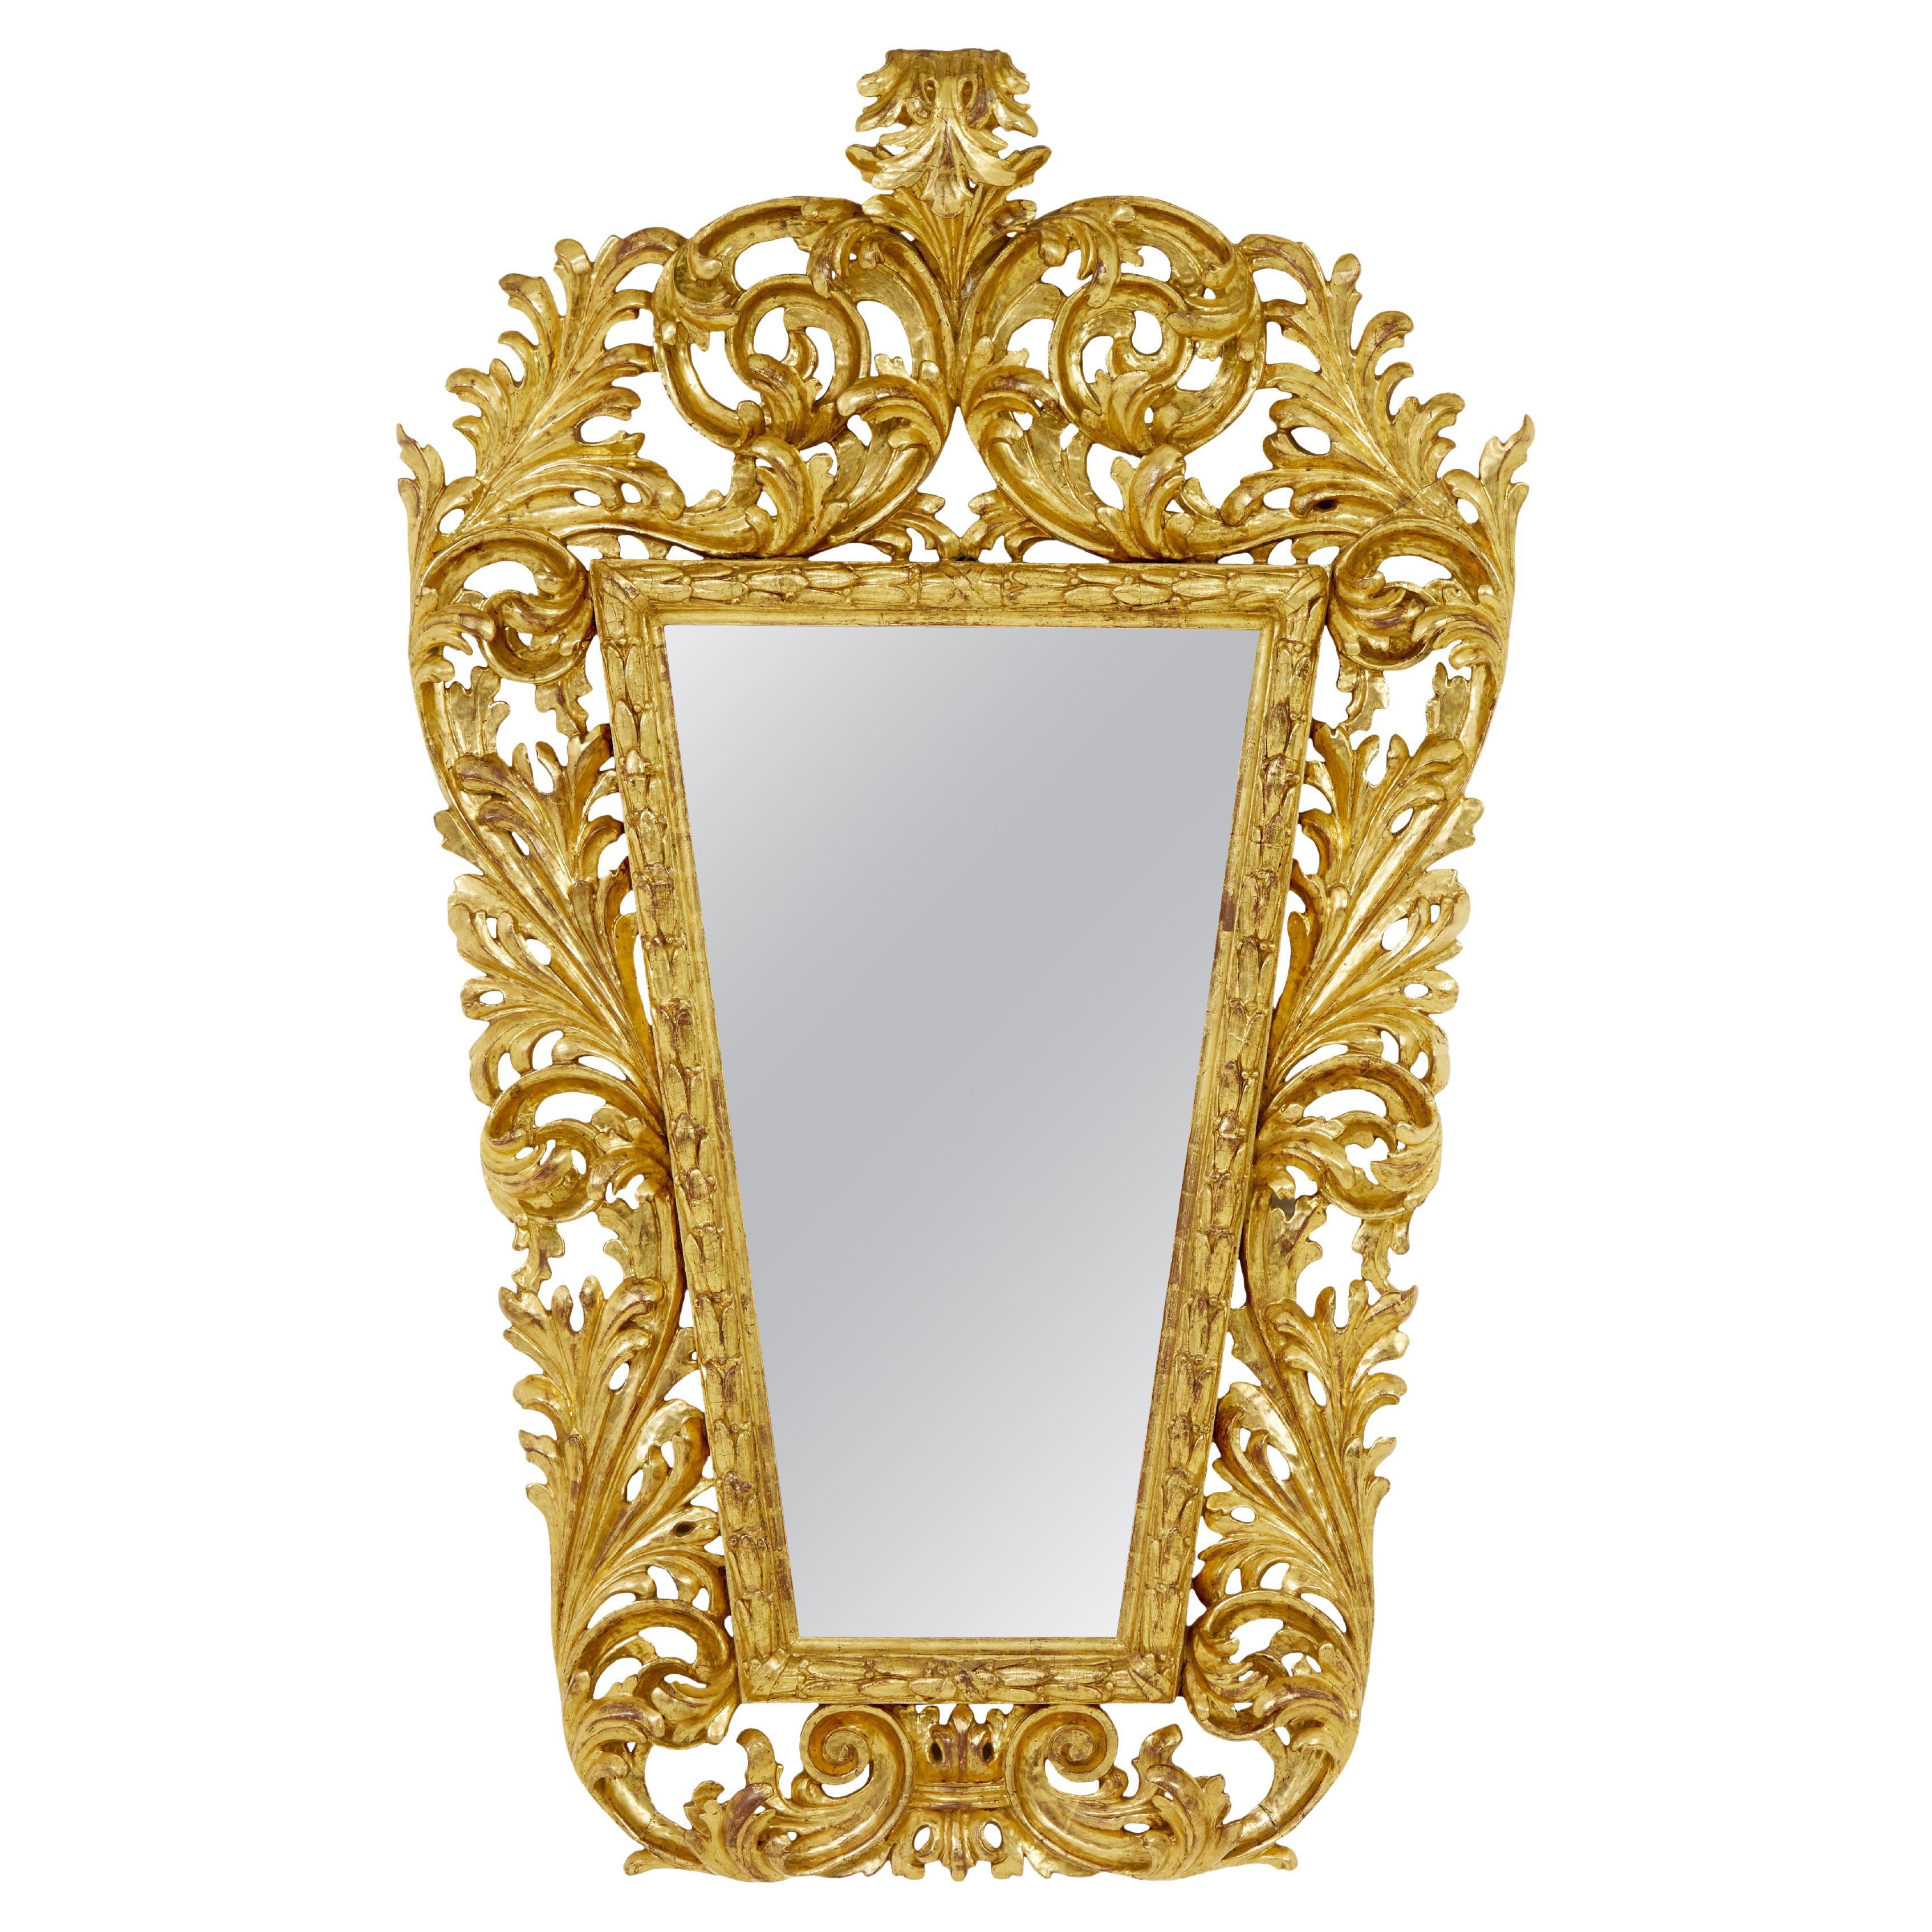 18th century carved Italian rococo giltwood mirror